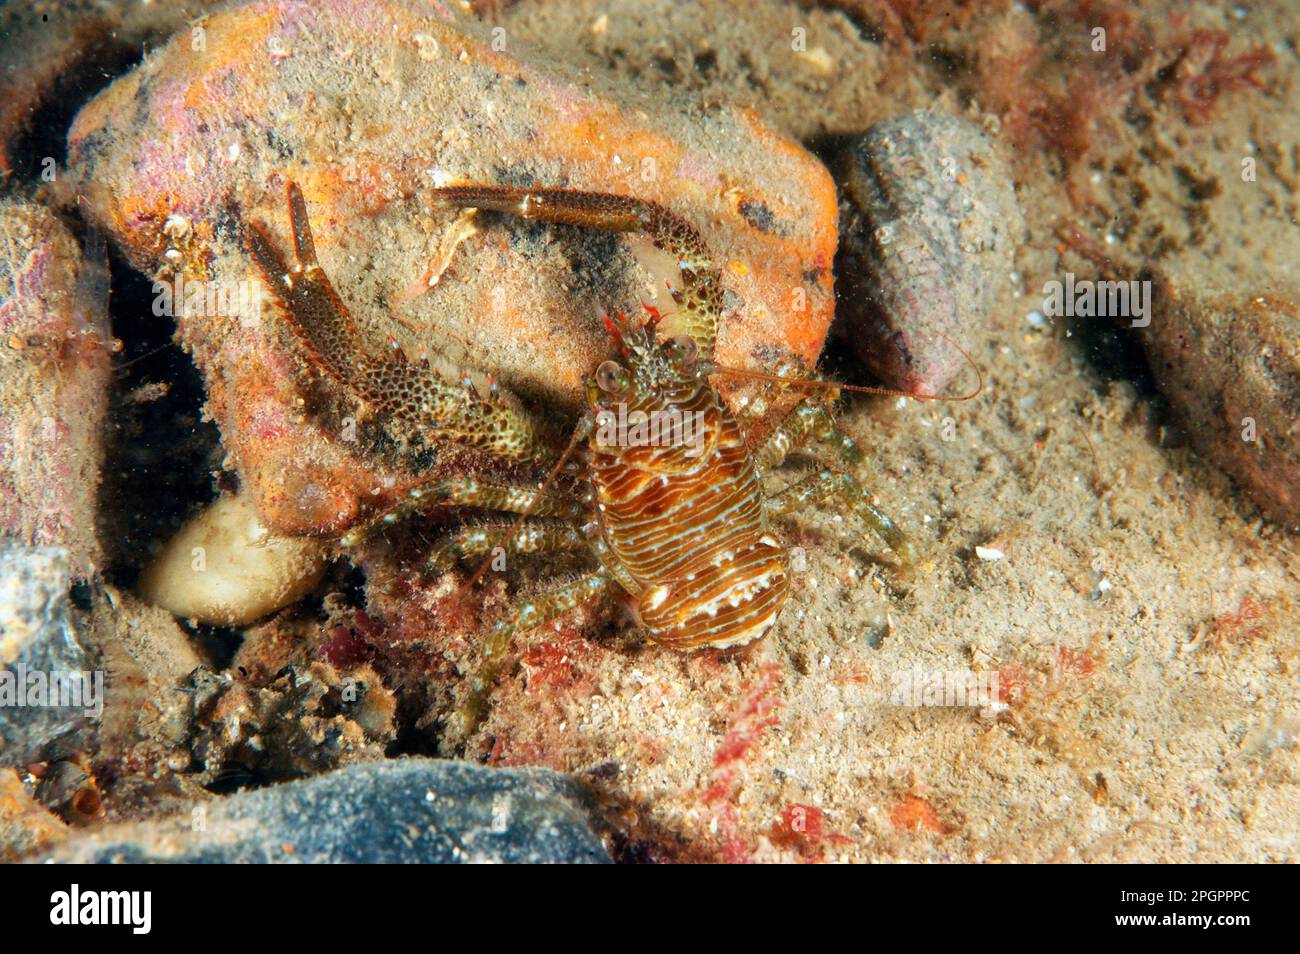 Montagu's Plated Lobster (Galathea squamifera) adult, on seabed, Swanage Pier, Dorset, England, United Kingdom Stock Photo